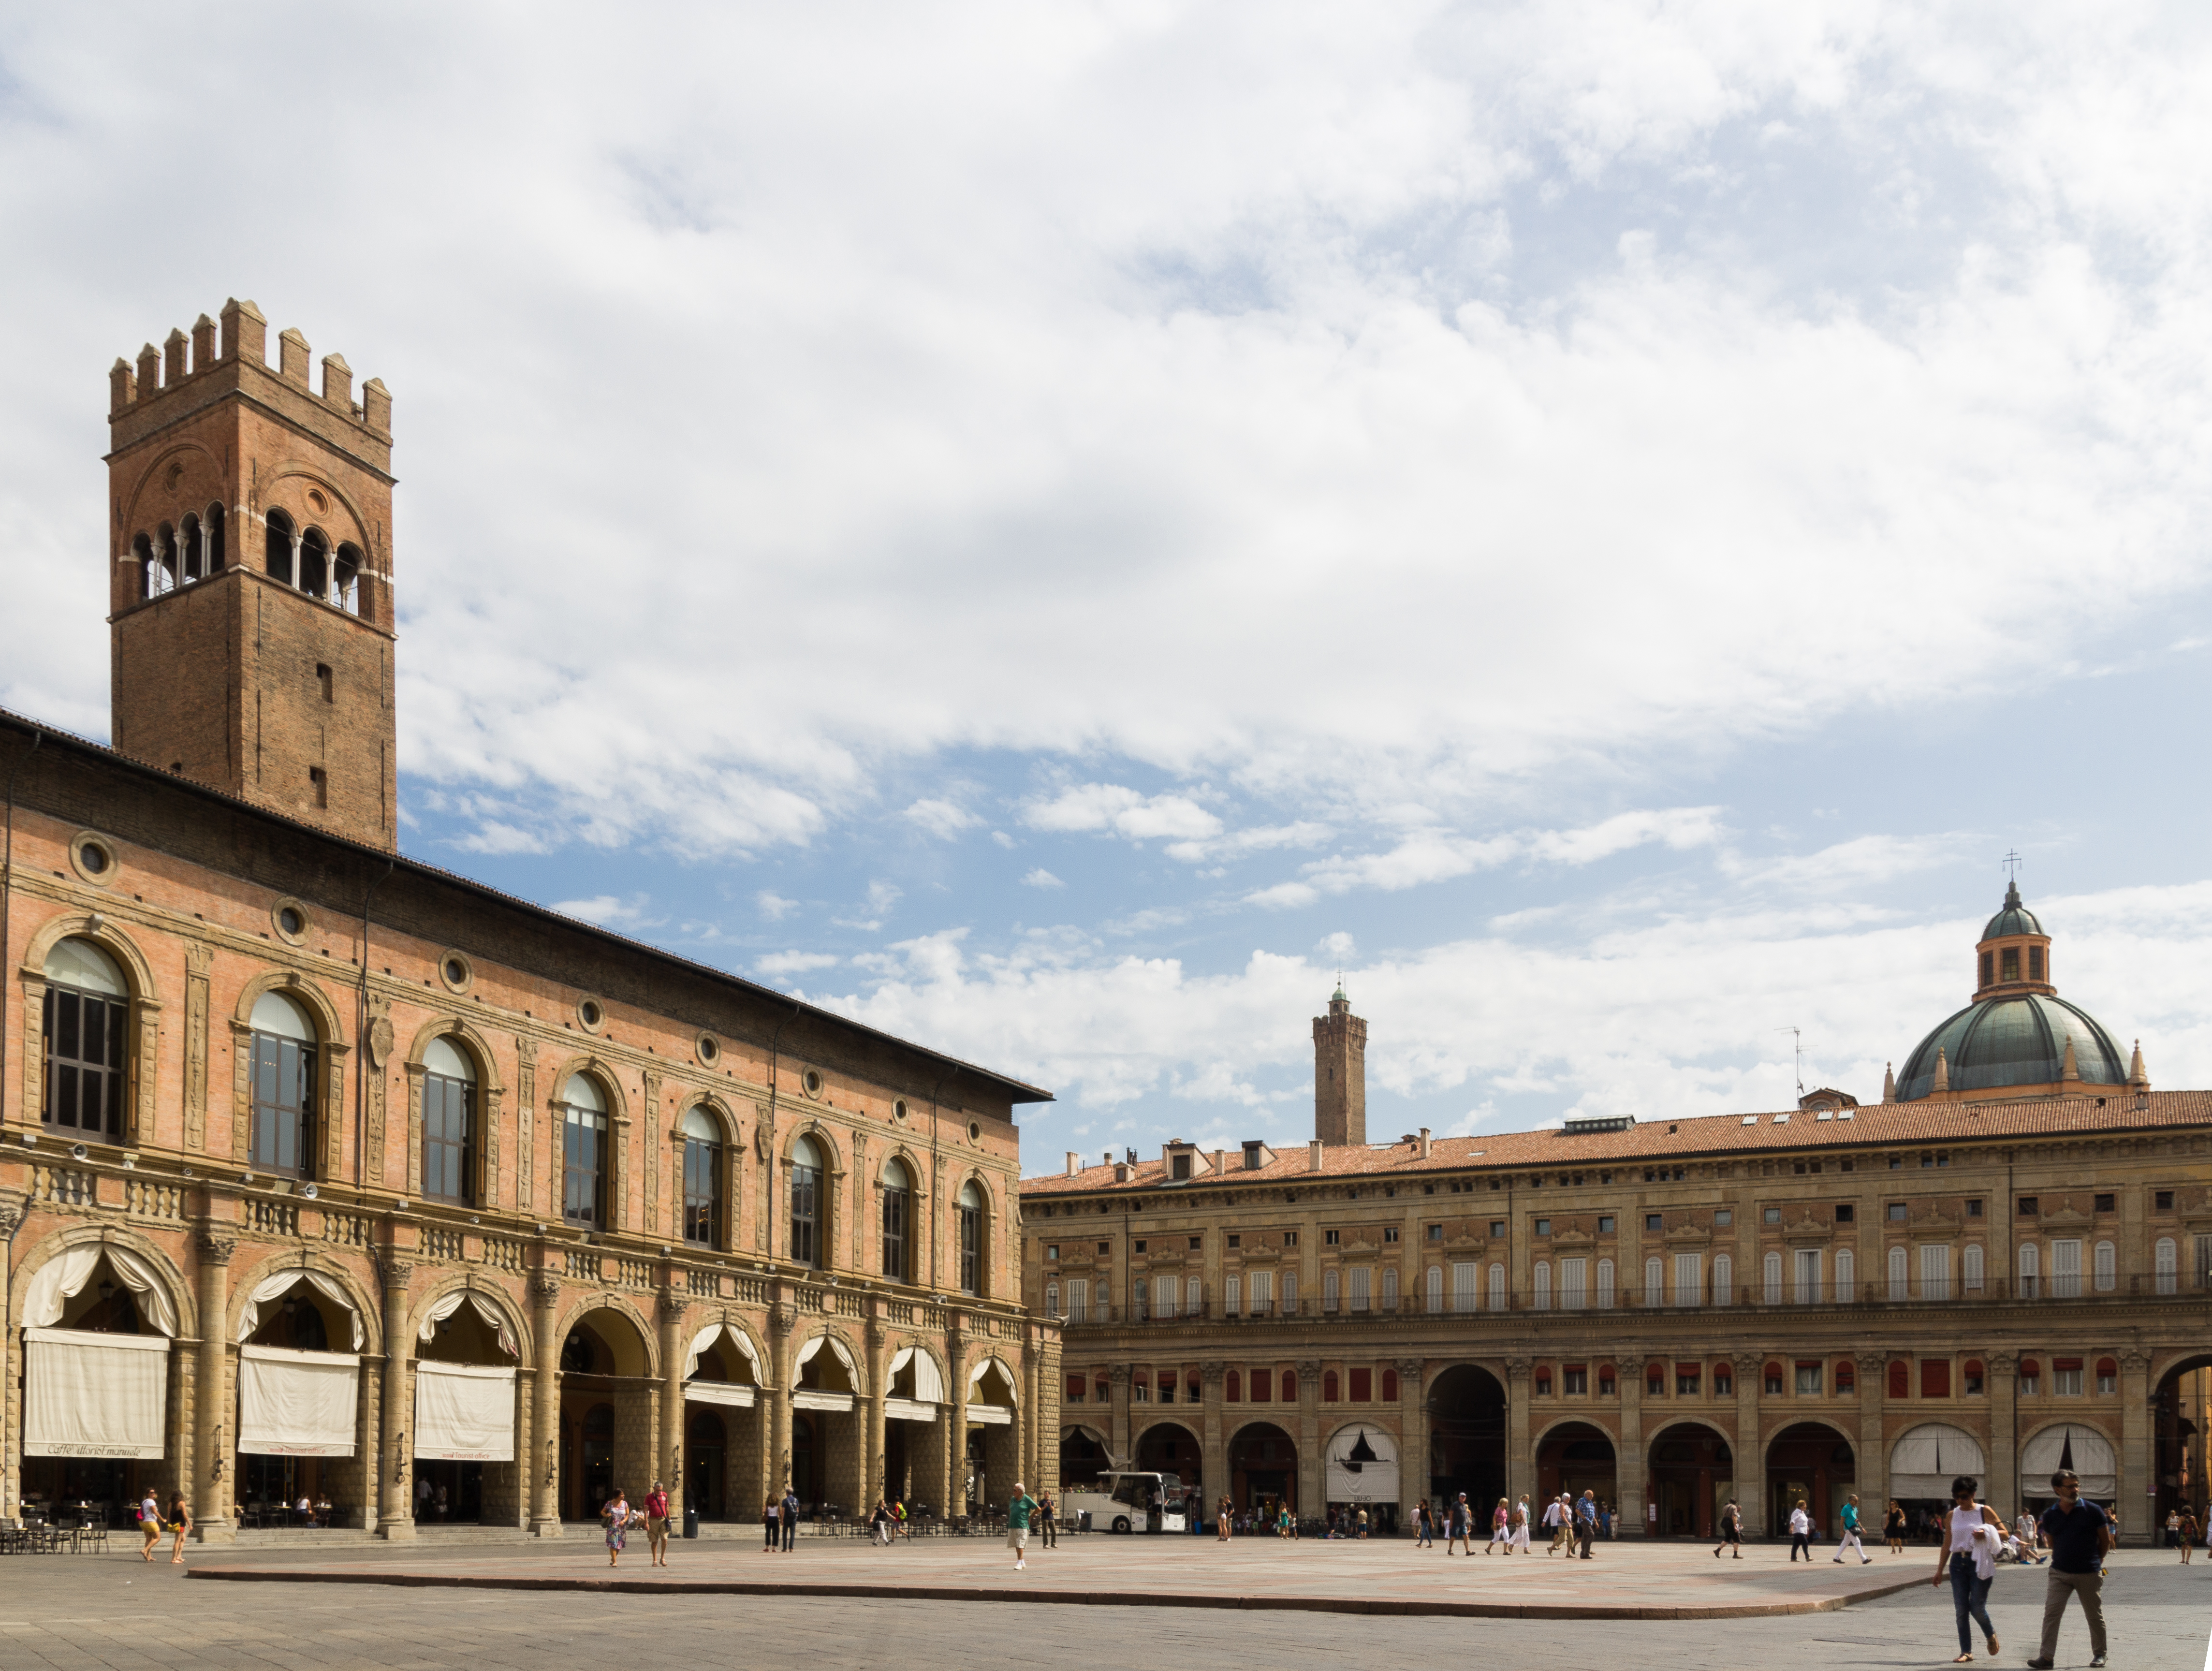 foto: https://upload.wikimedia.org/wikipedia/commons/d/d7/Piazza_maggiore.jpg